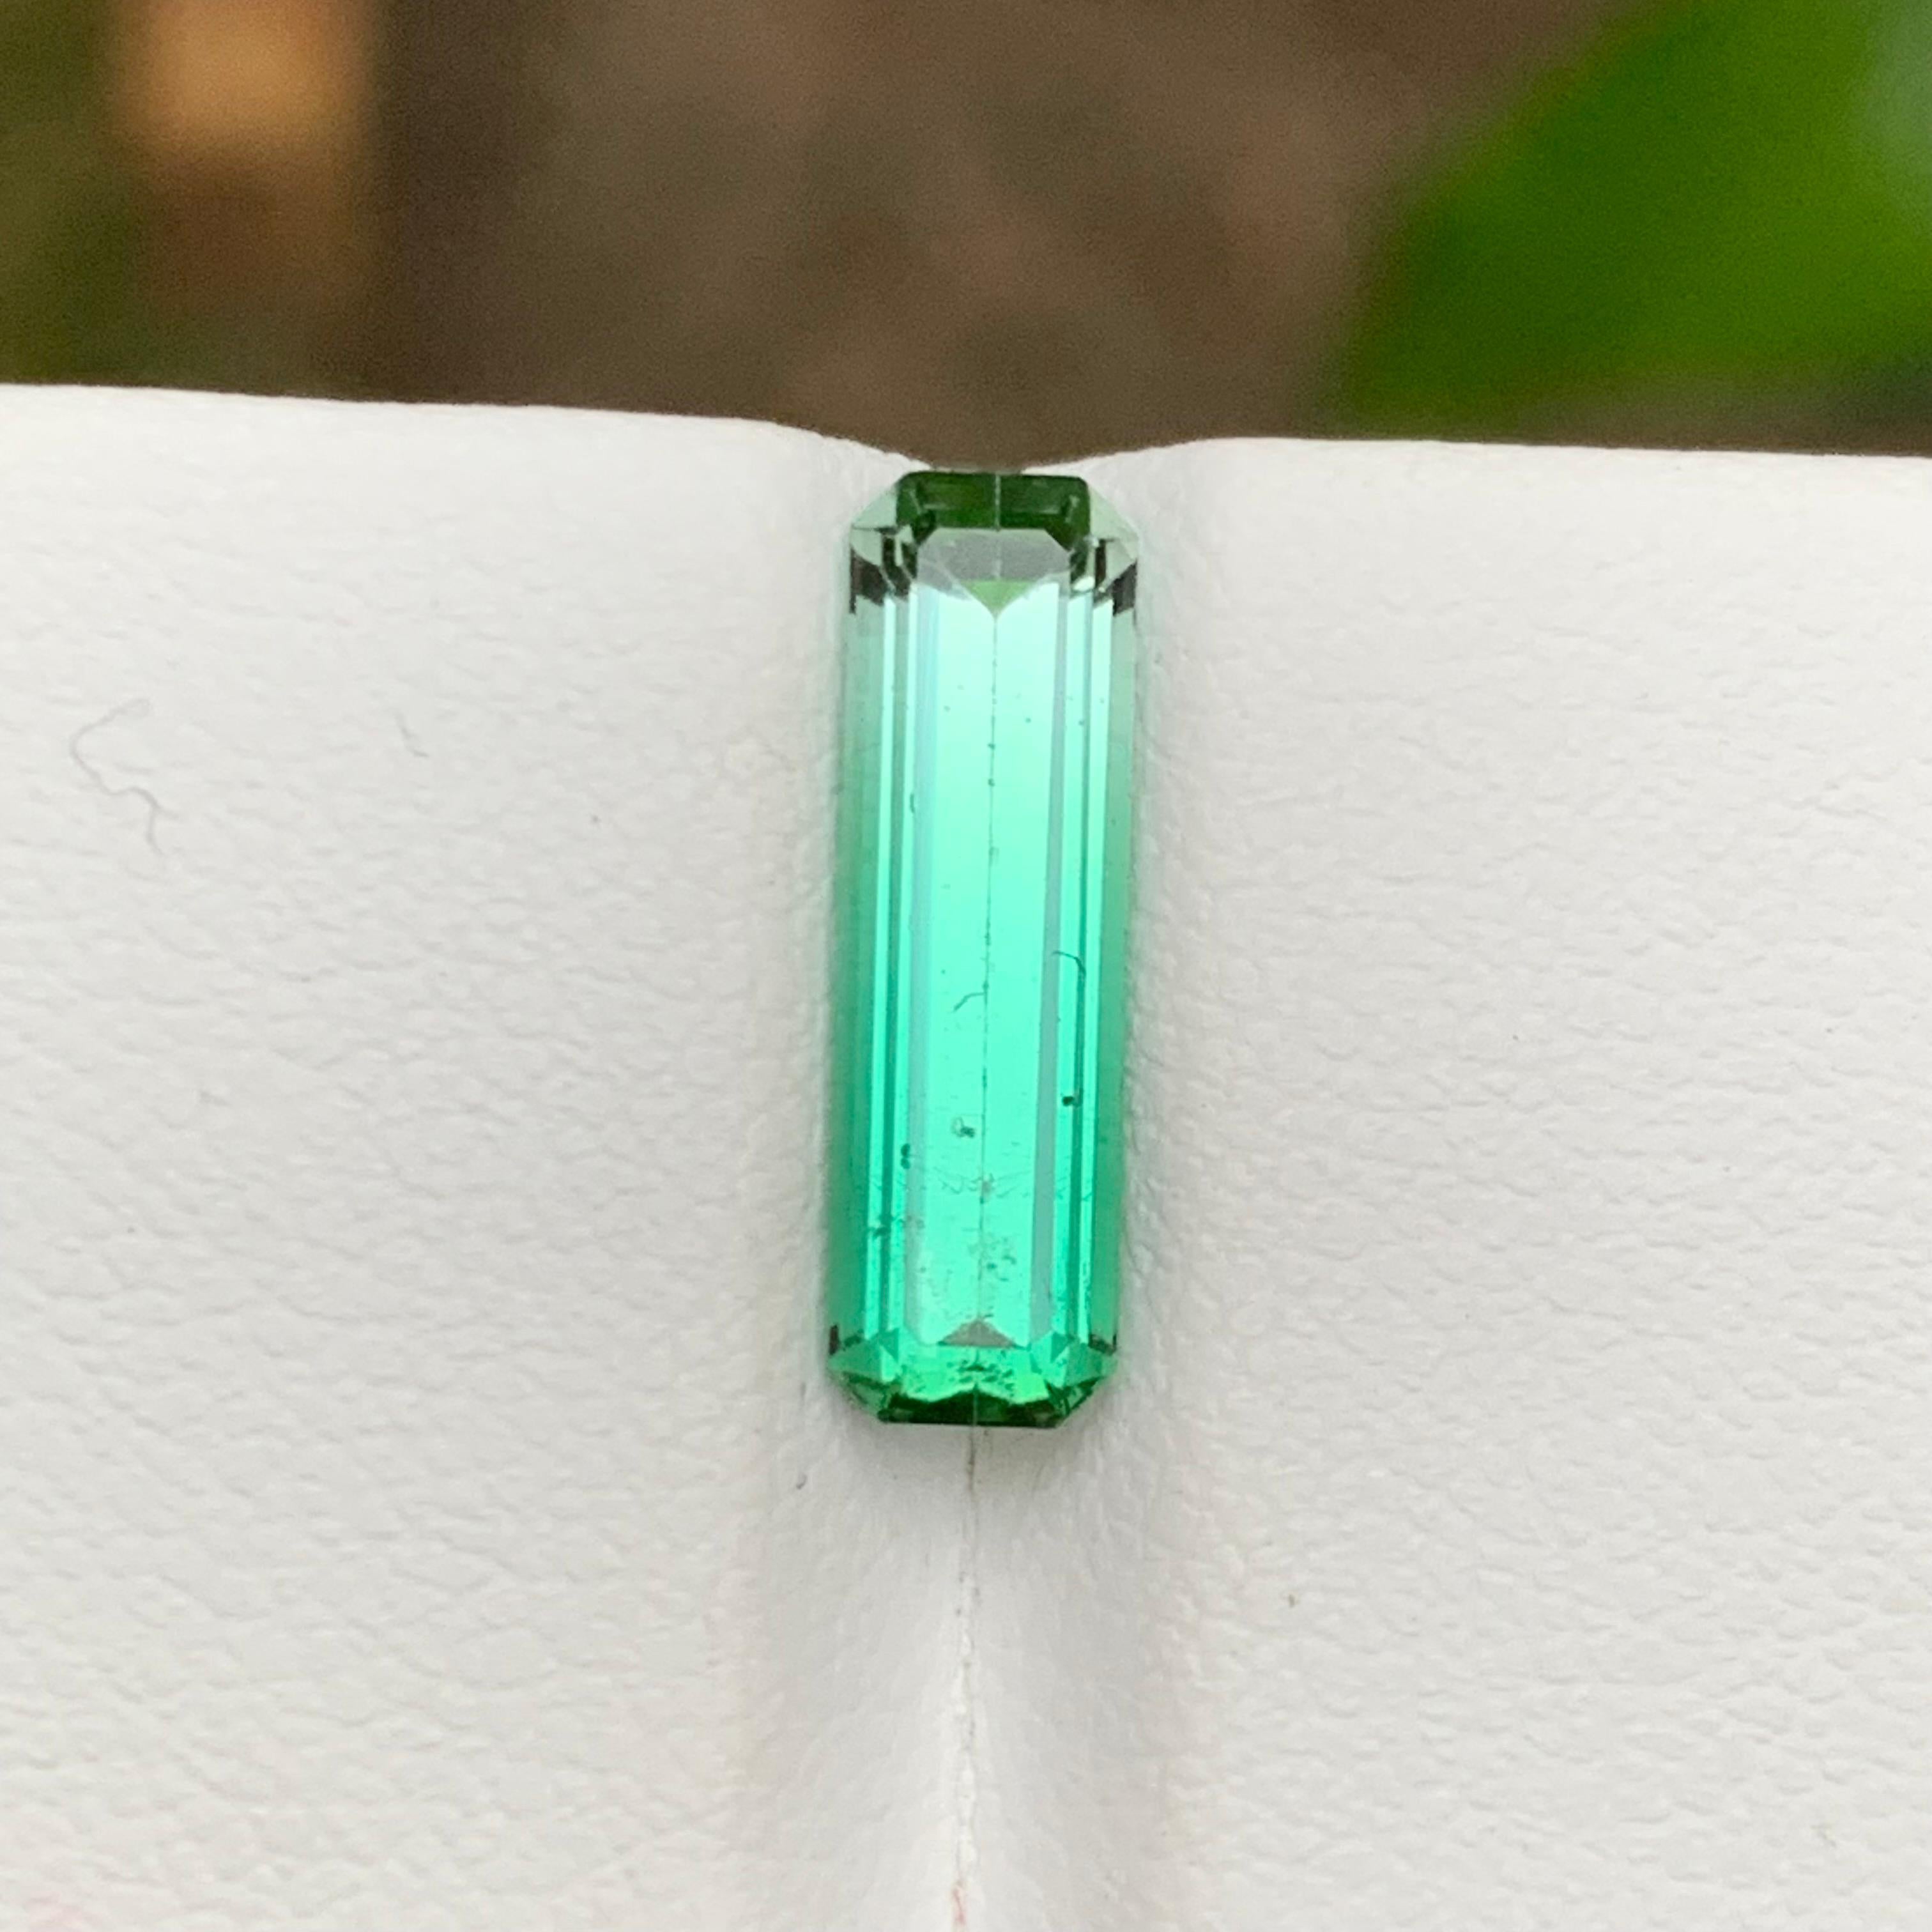 Rare Vivid Bluish Green Bicolor Tourmaline Gemstone 2.85 Ct Emerald Cut for Ring For Sale 1